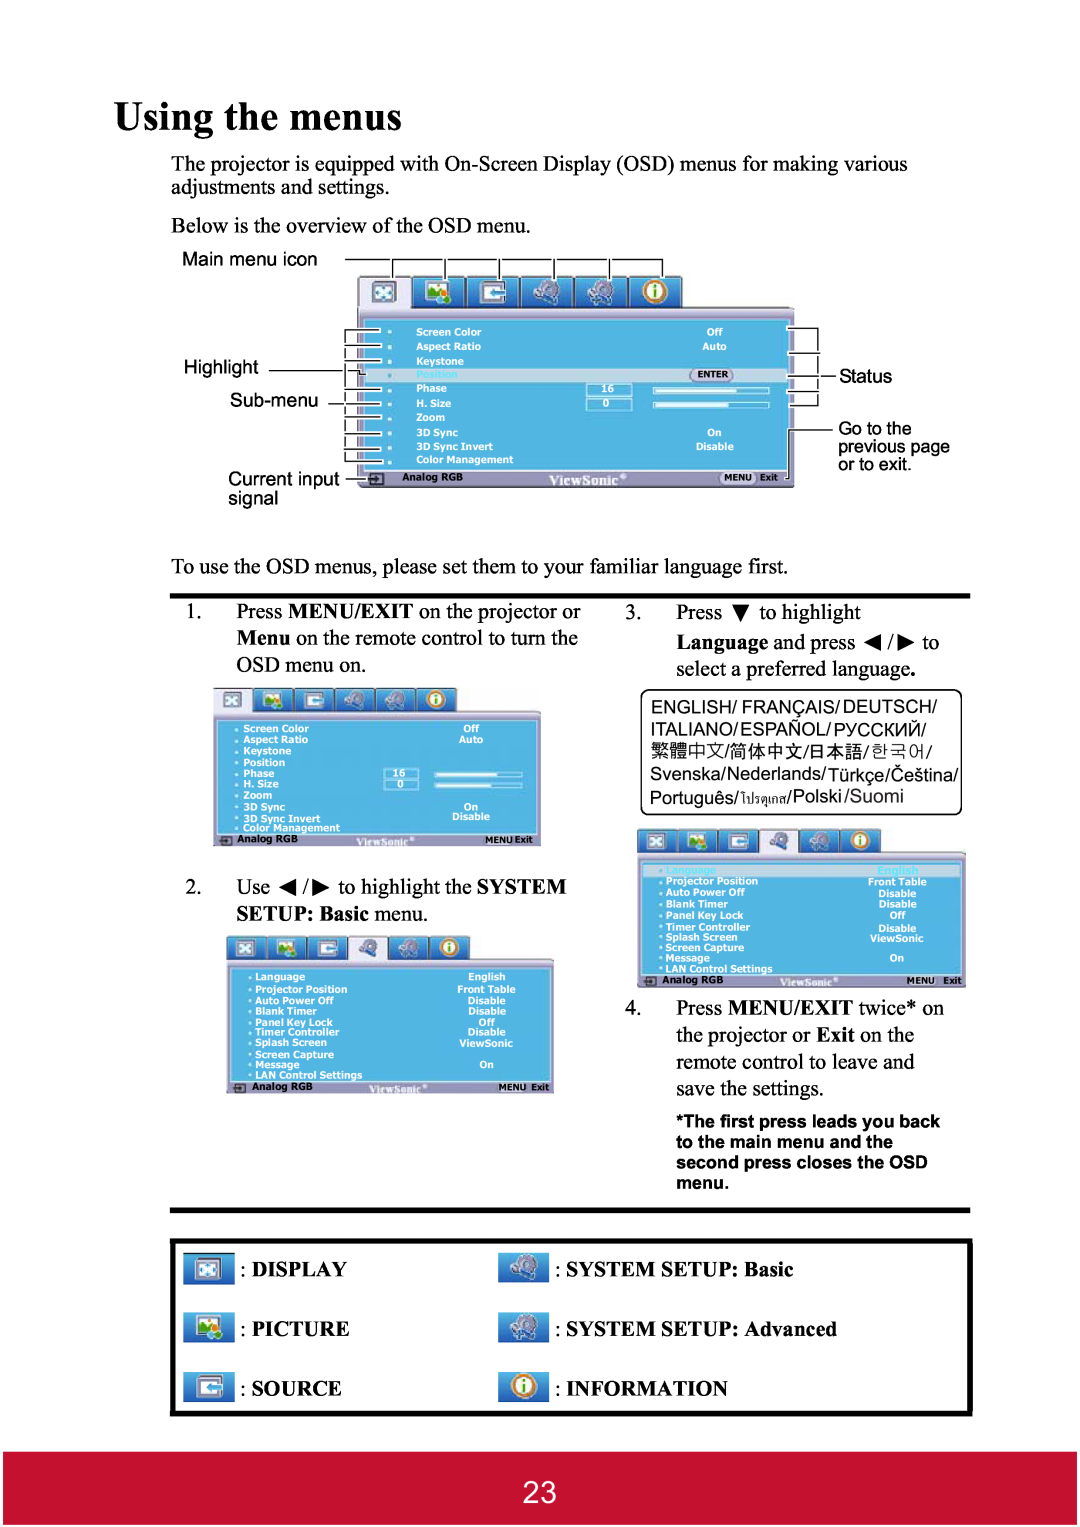 ViewSonic PJD7400W Using the menus, to highlight the SYSTEM, SETUP Basic menu, Display, SYSTEM SETUP Basic, Picture 